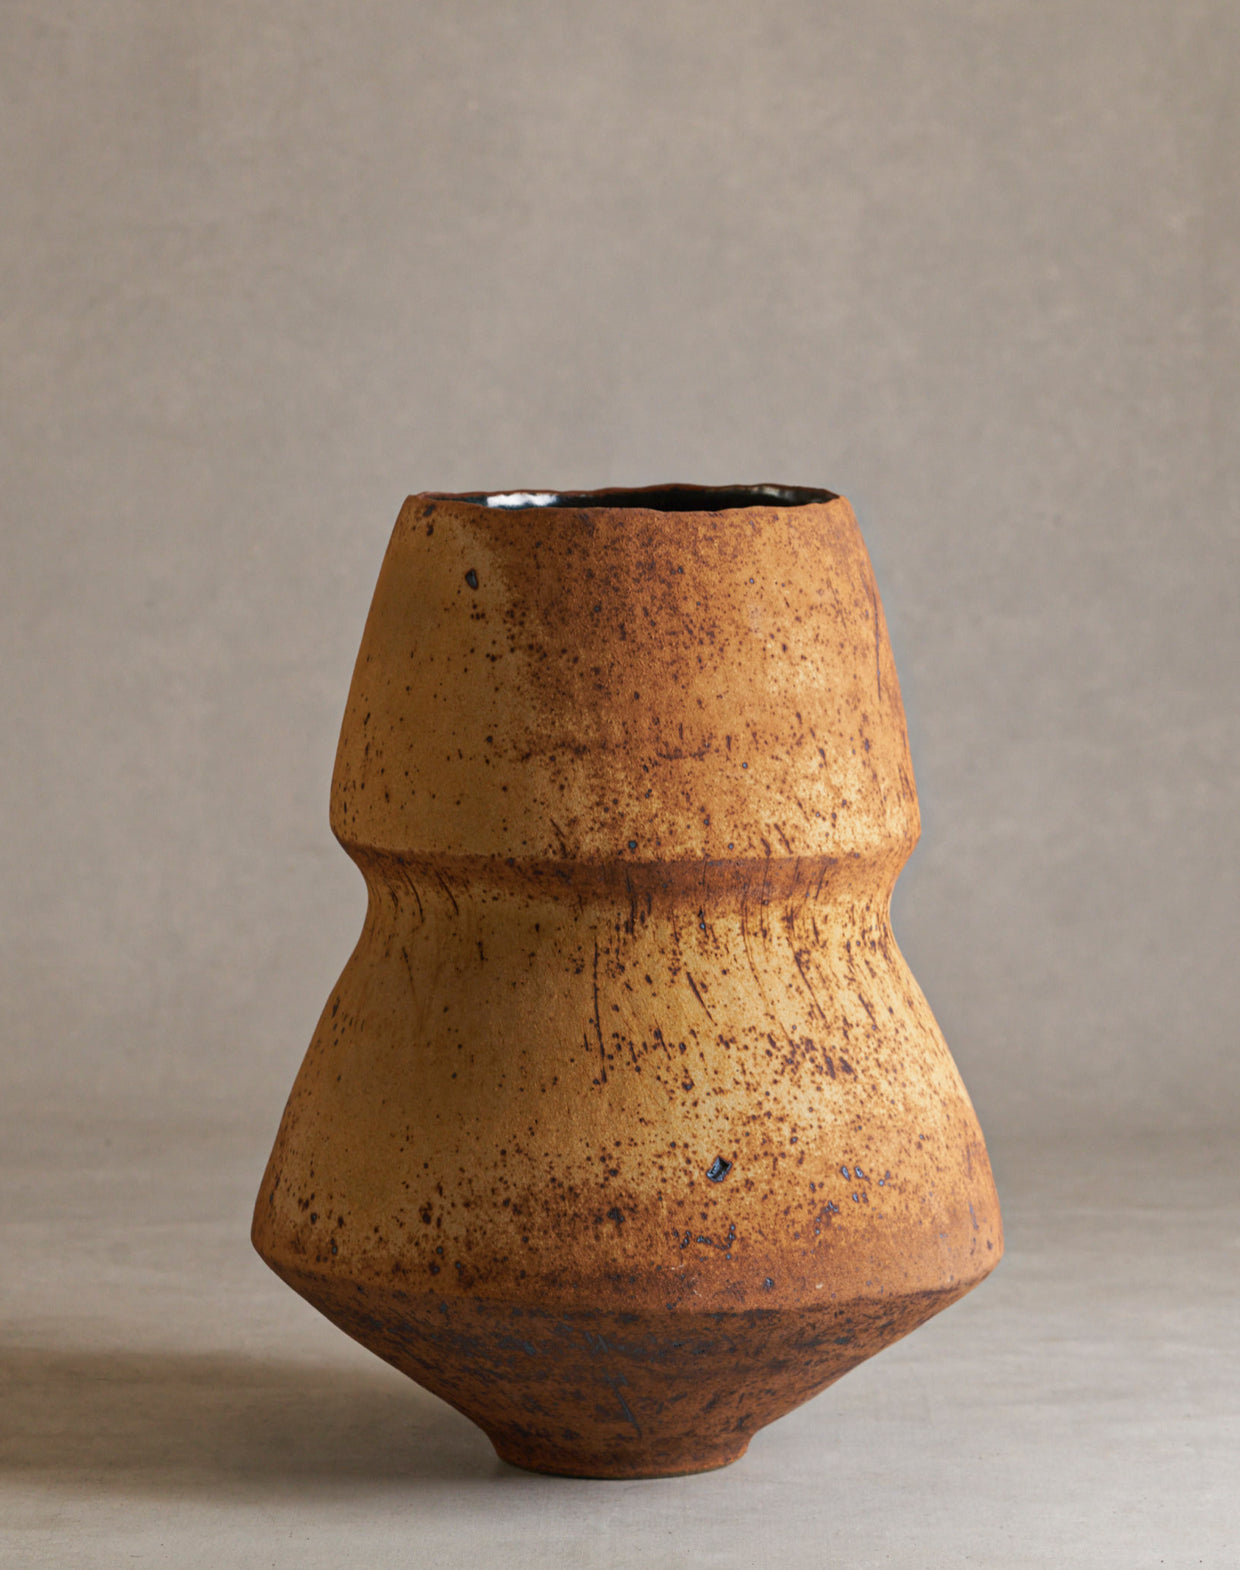 Rick Hintze Coiled Stoneware Vessel, "Untitled" No. 09